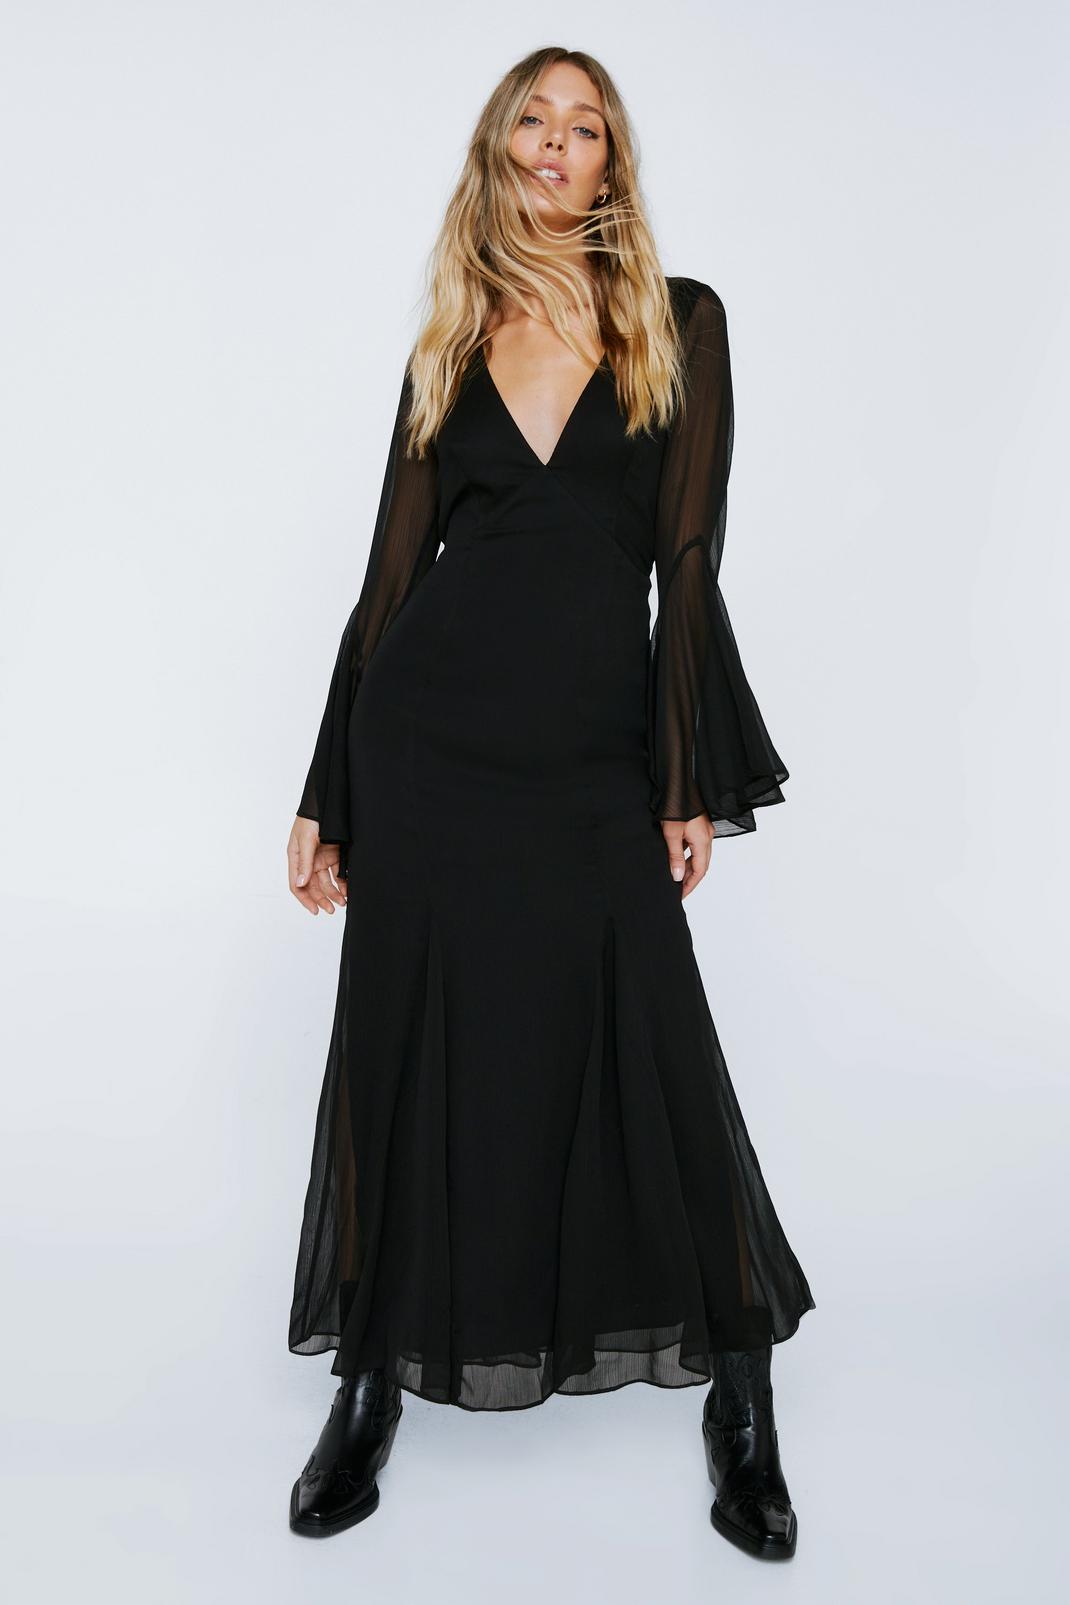 Long Sleeve Chiffon Long Dresses Cheap Sale | bellvalefarms.com